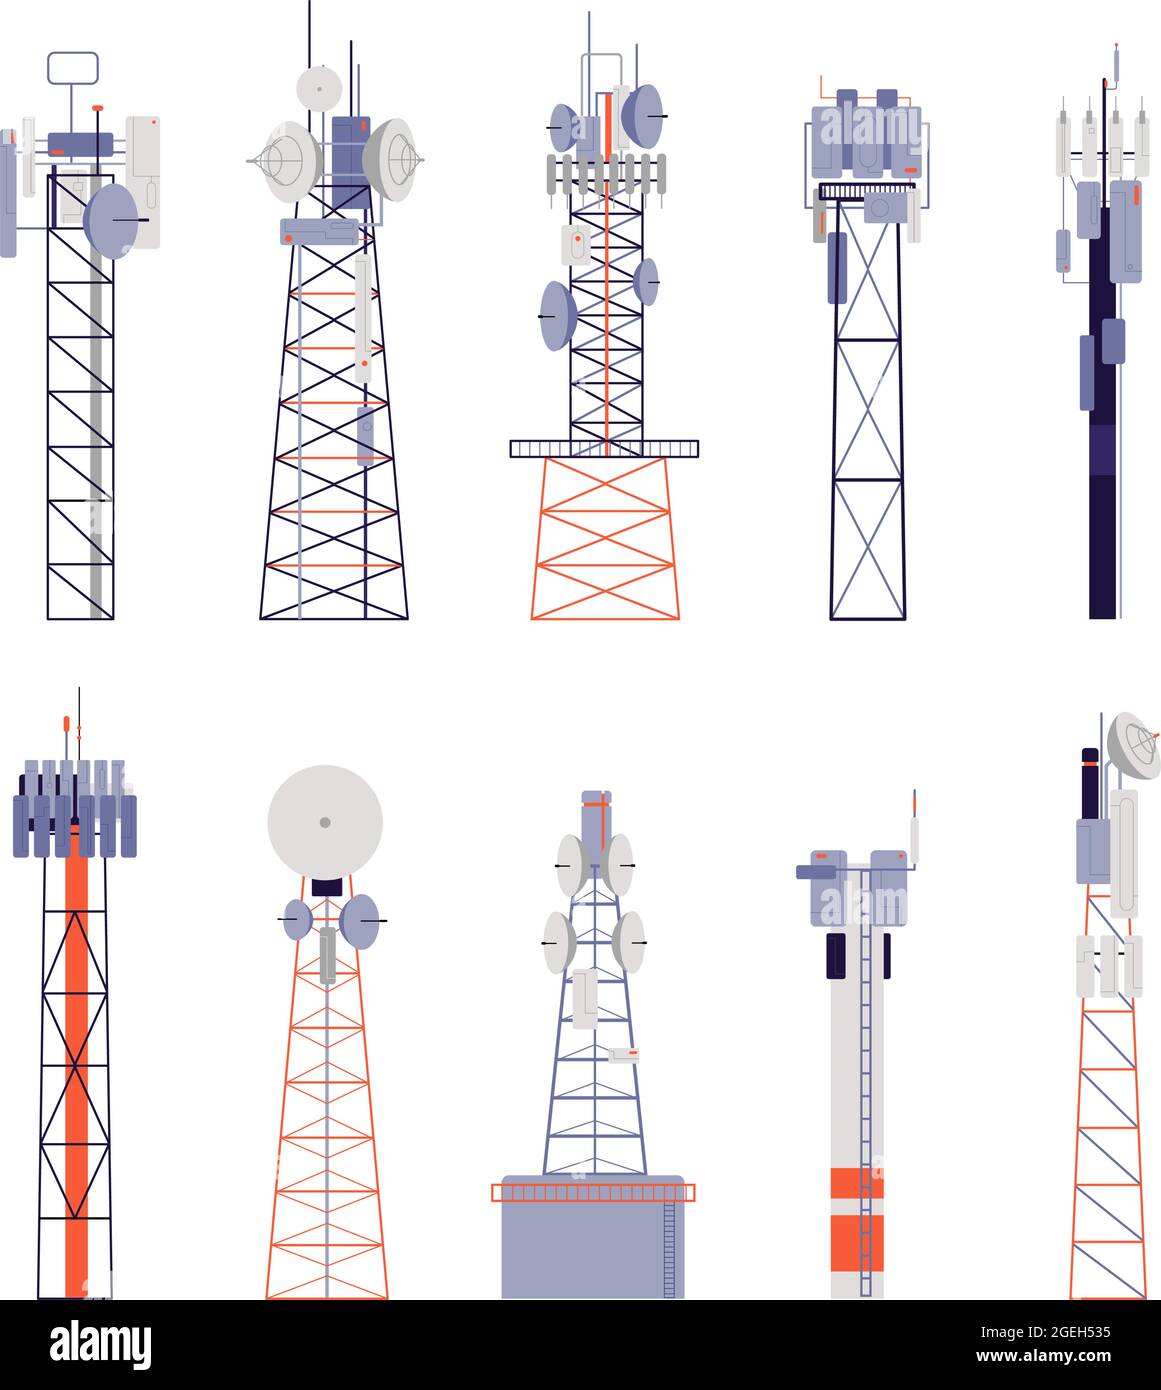 Wireless-Tower. Satellitenkommunikation, isolierte Funkantenne oder Mobilfunkgeräte. Vektorgrafik Antenne, Telefonsignalstation Stock Vektor